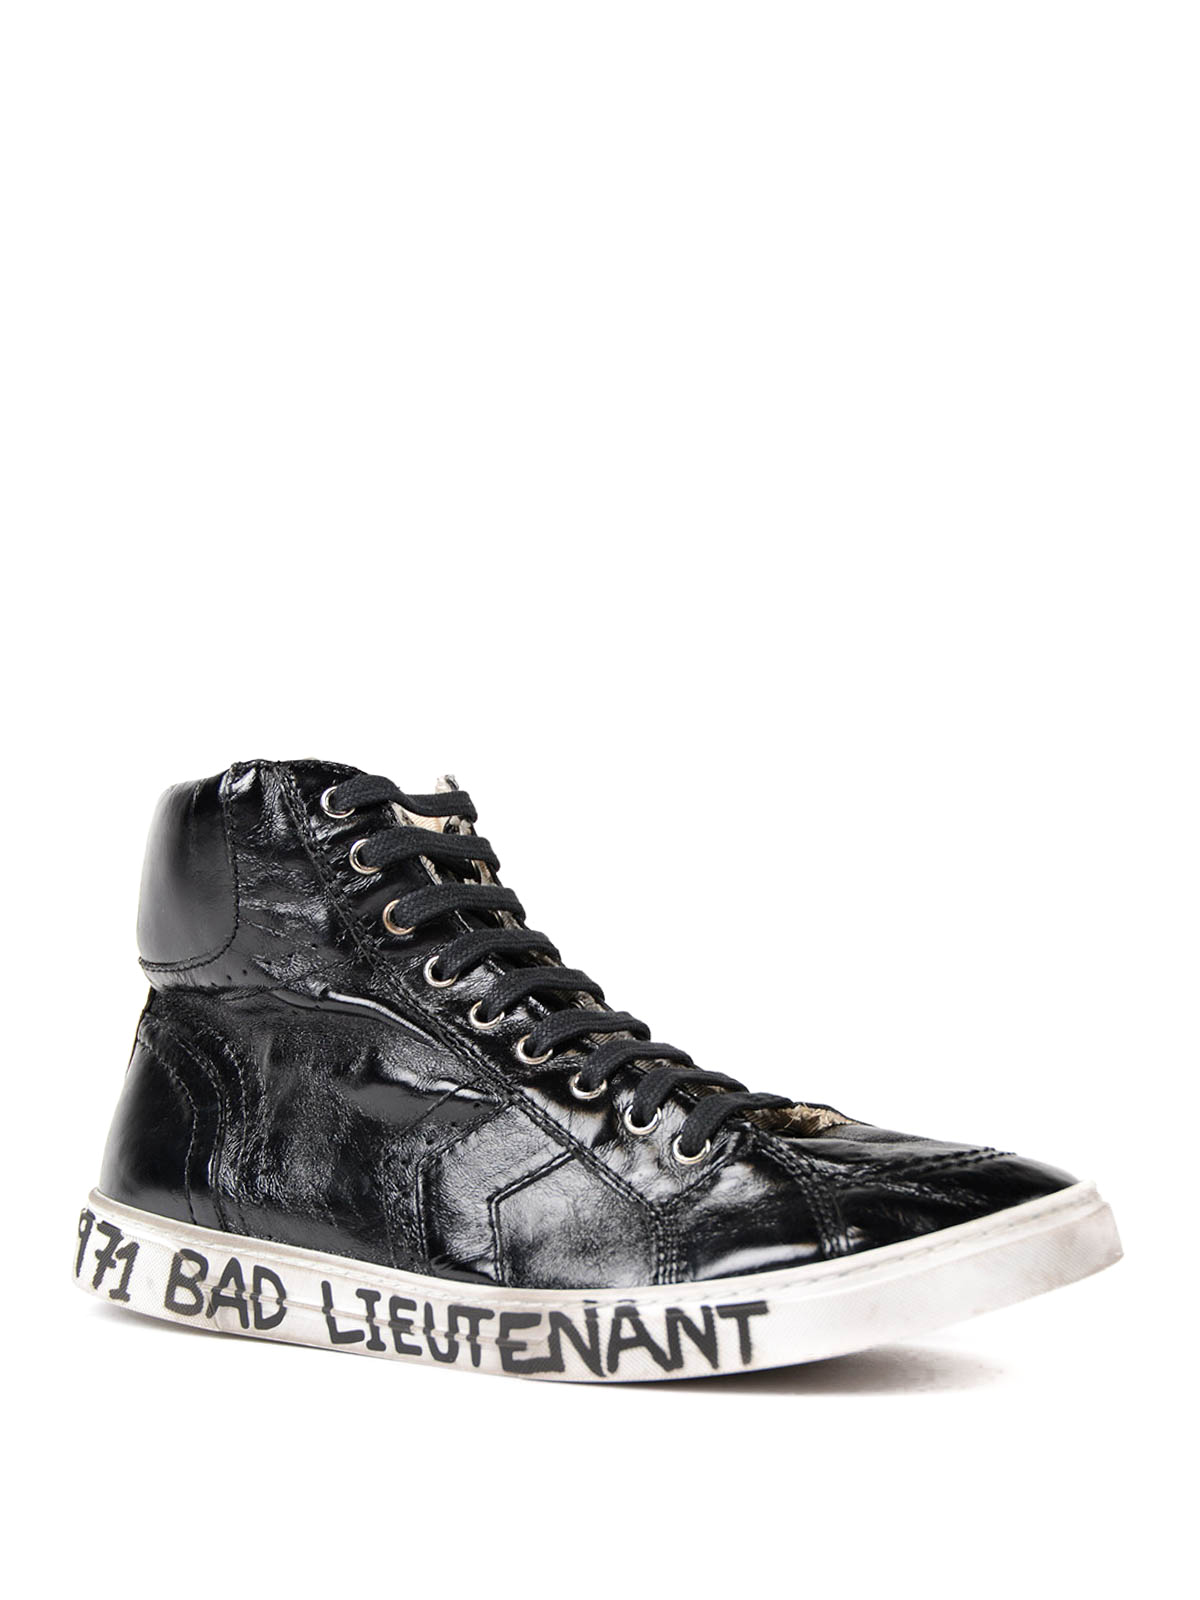 saint laurent bad lieutenant sneakers